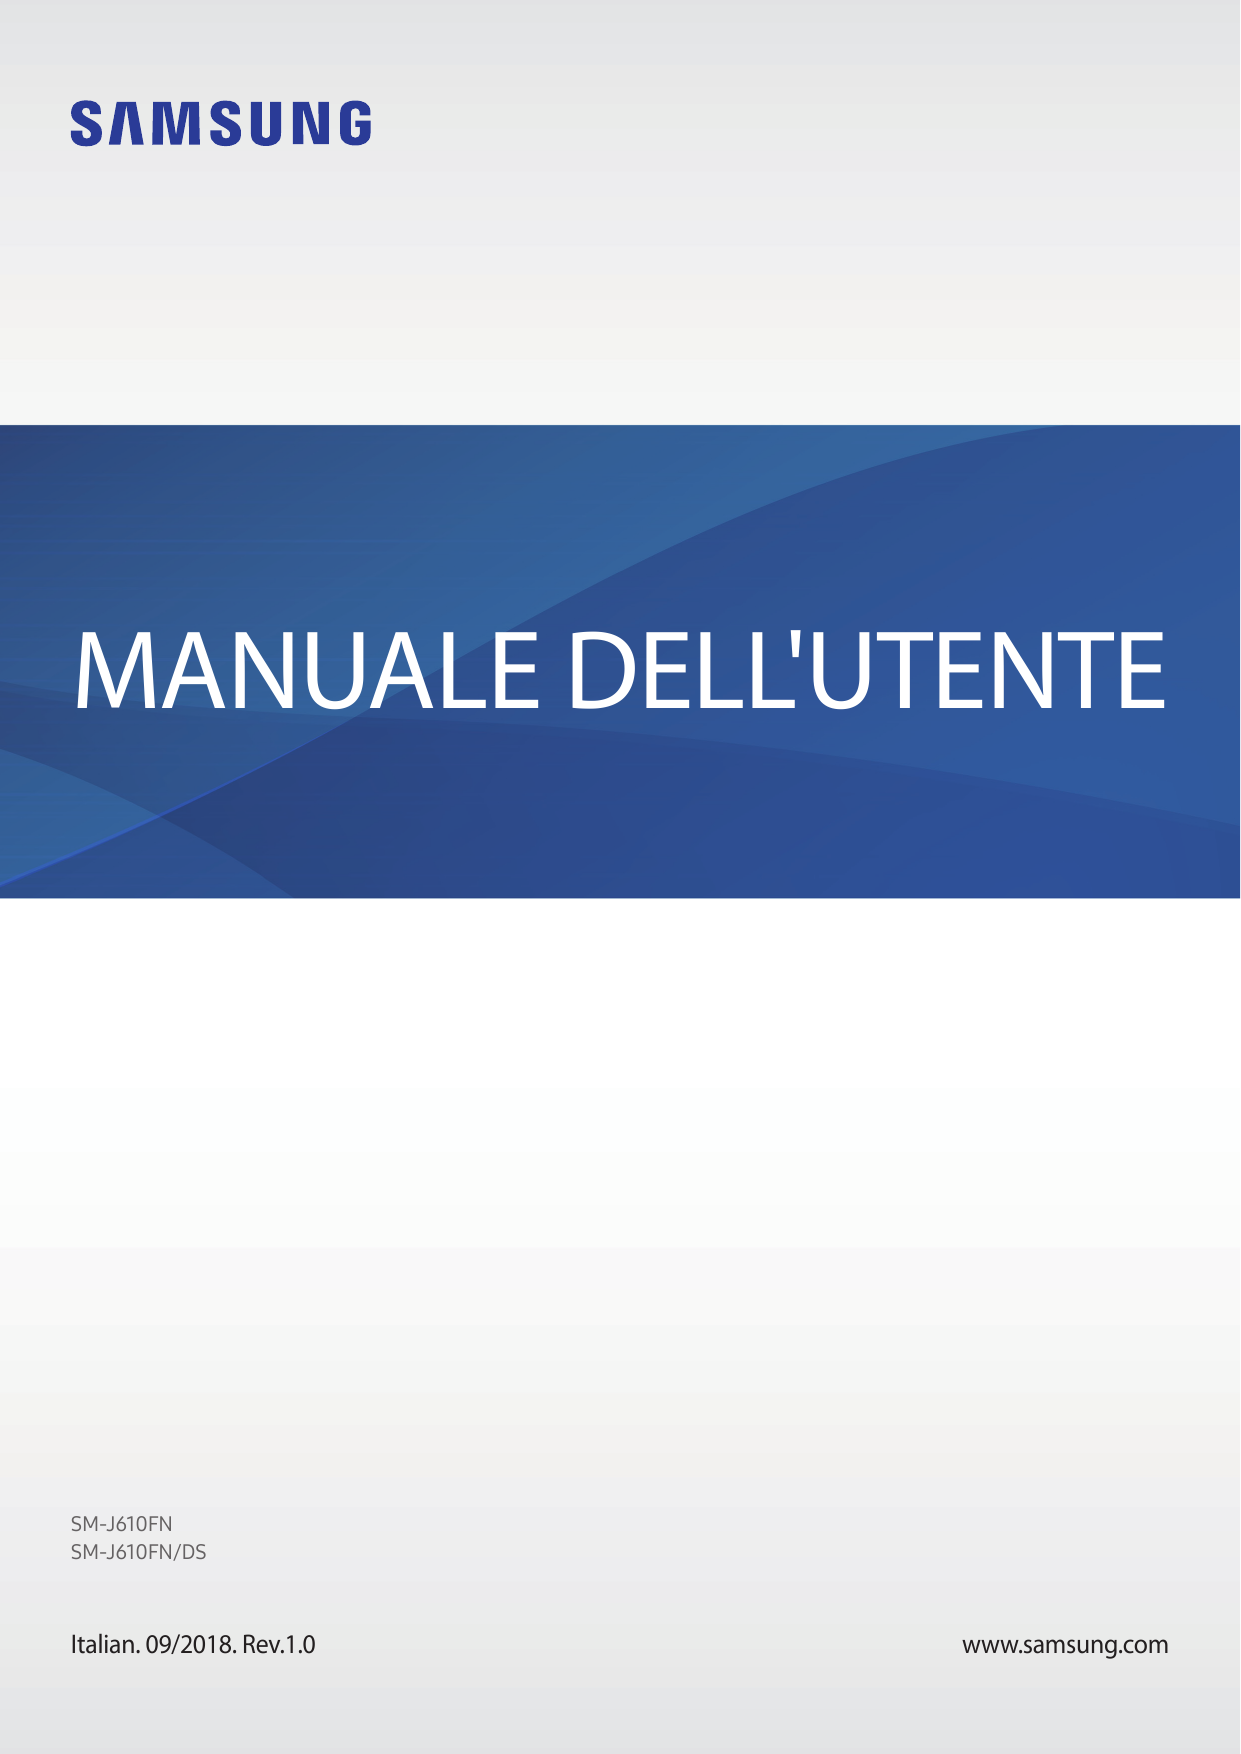 MANUALE DELL'UTENTESM-J610FNSM-J610FN/DSItalian. 09/2018. Rev.1.0www.samsung.com